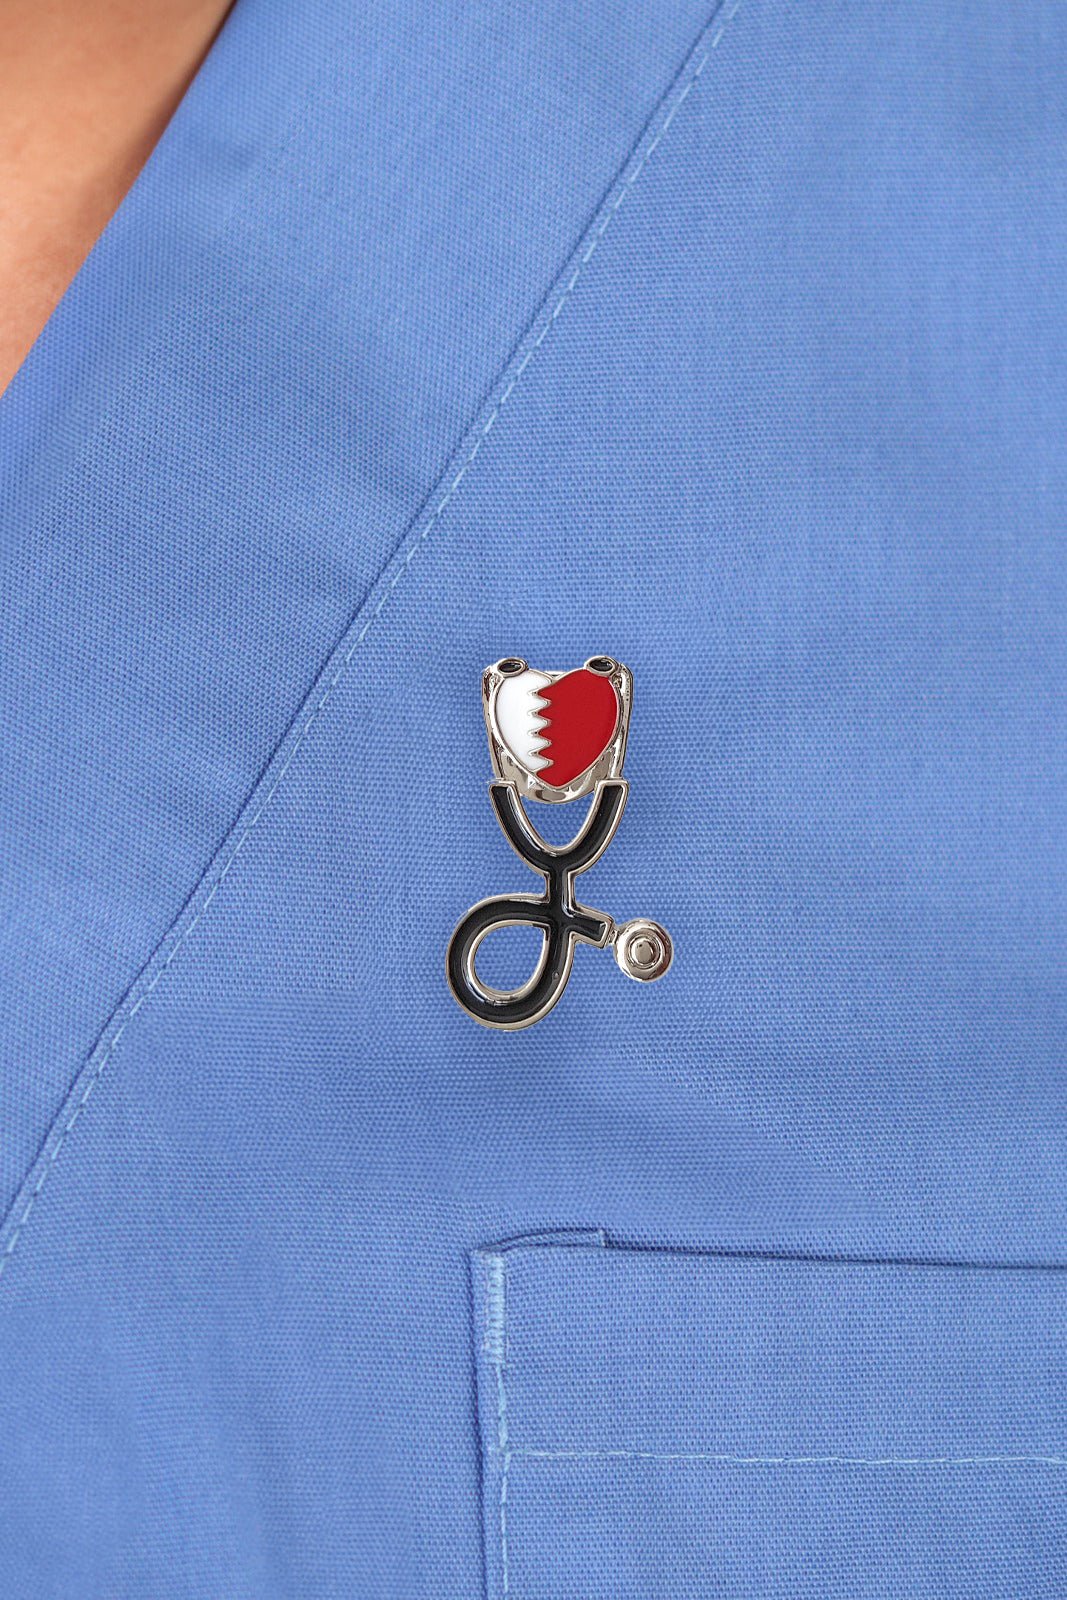 Bahrain Stethoscope flag pin